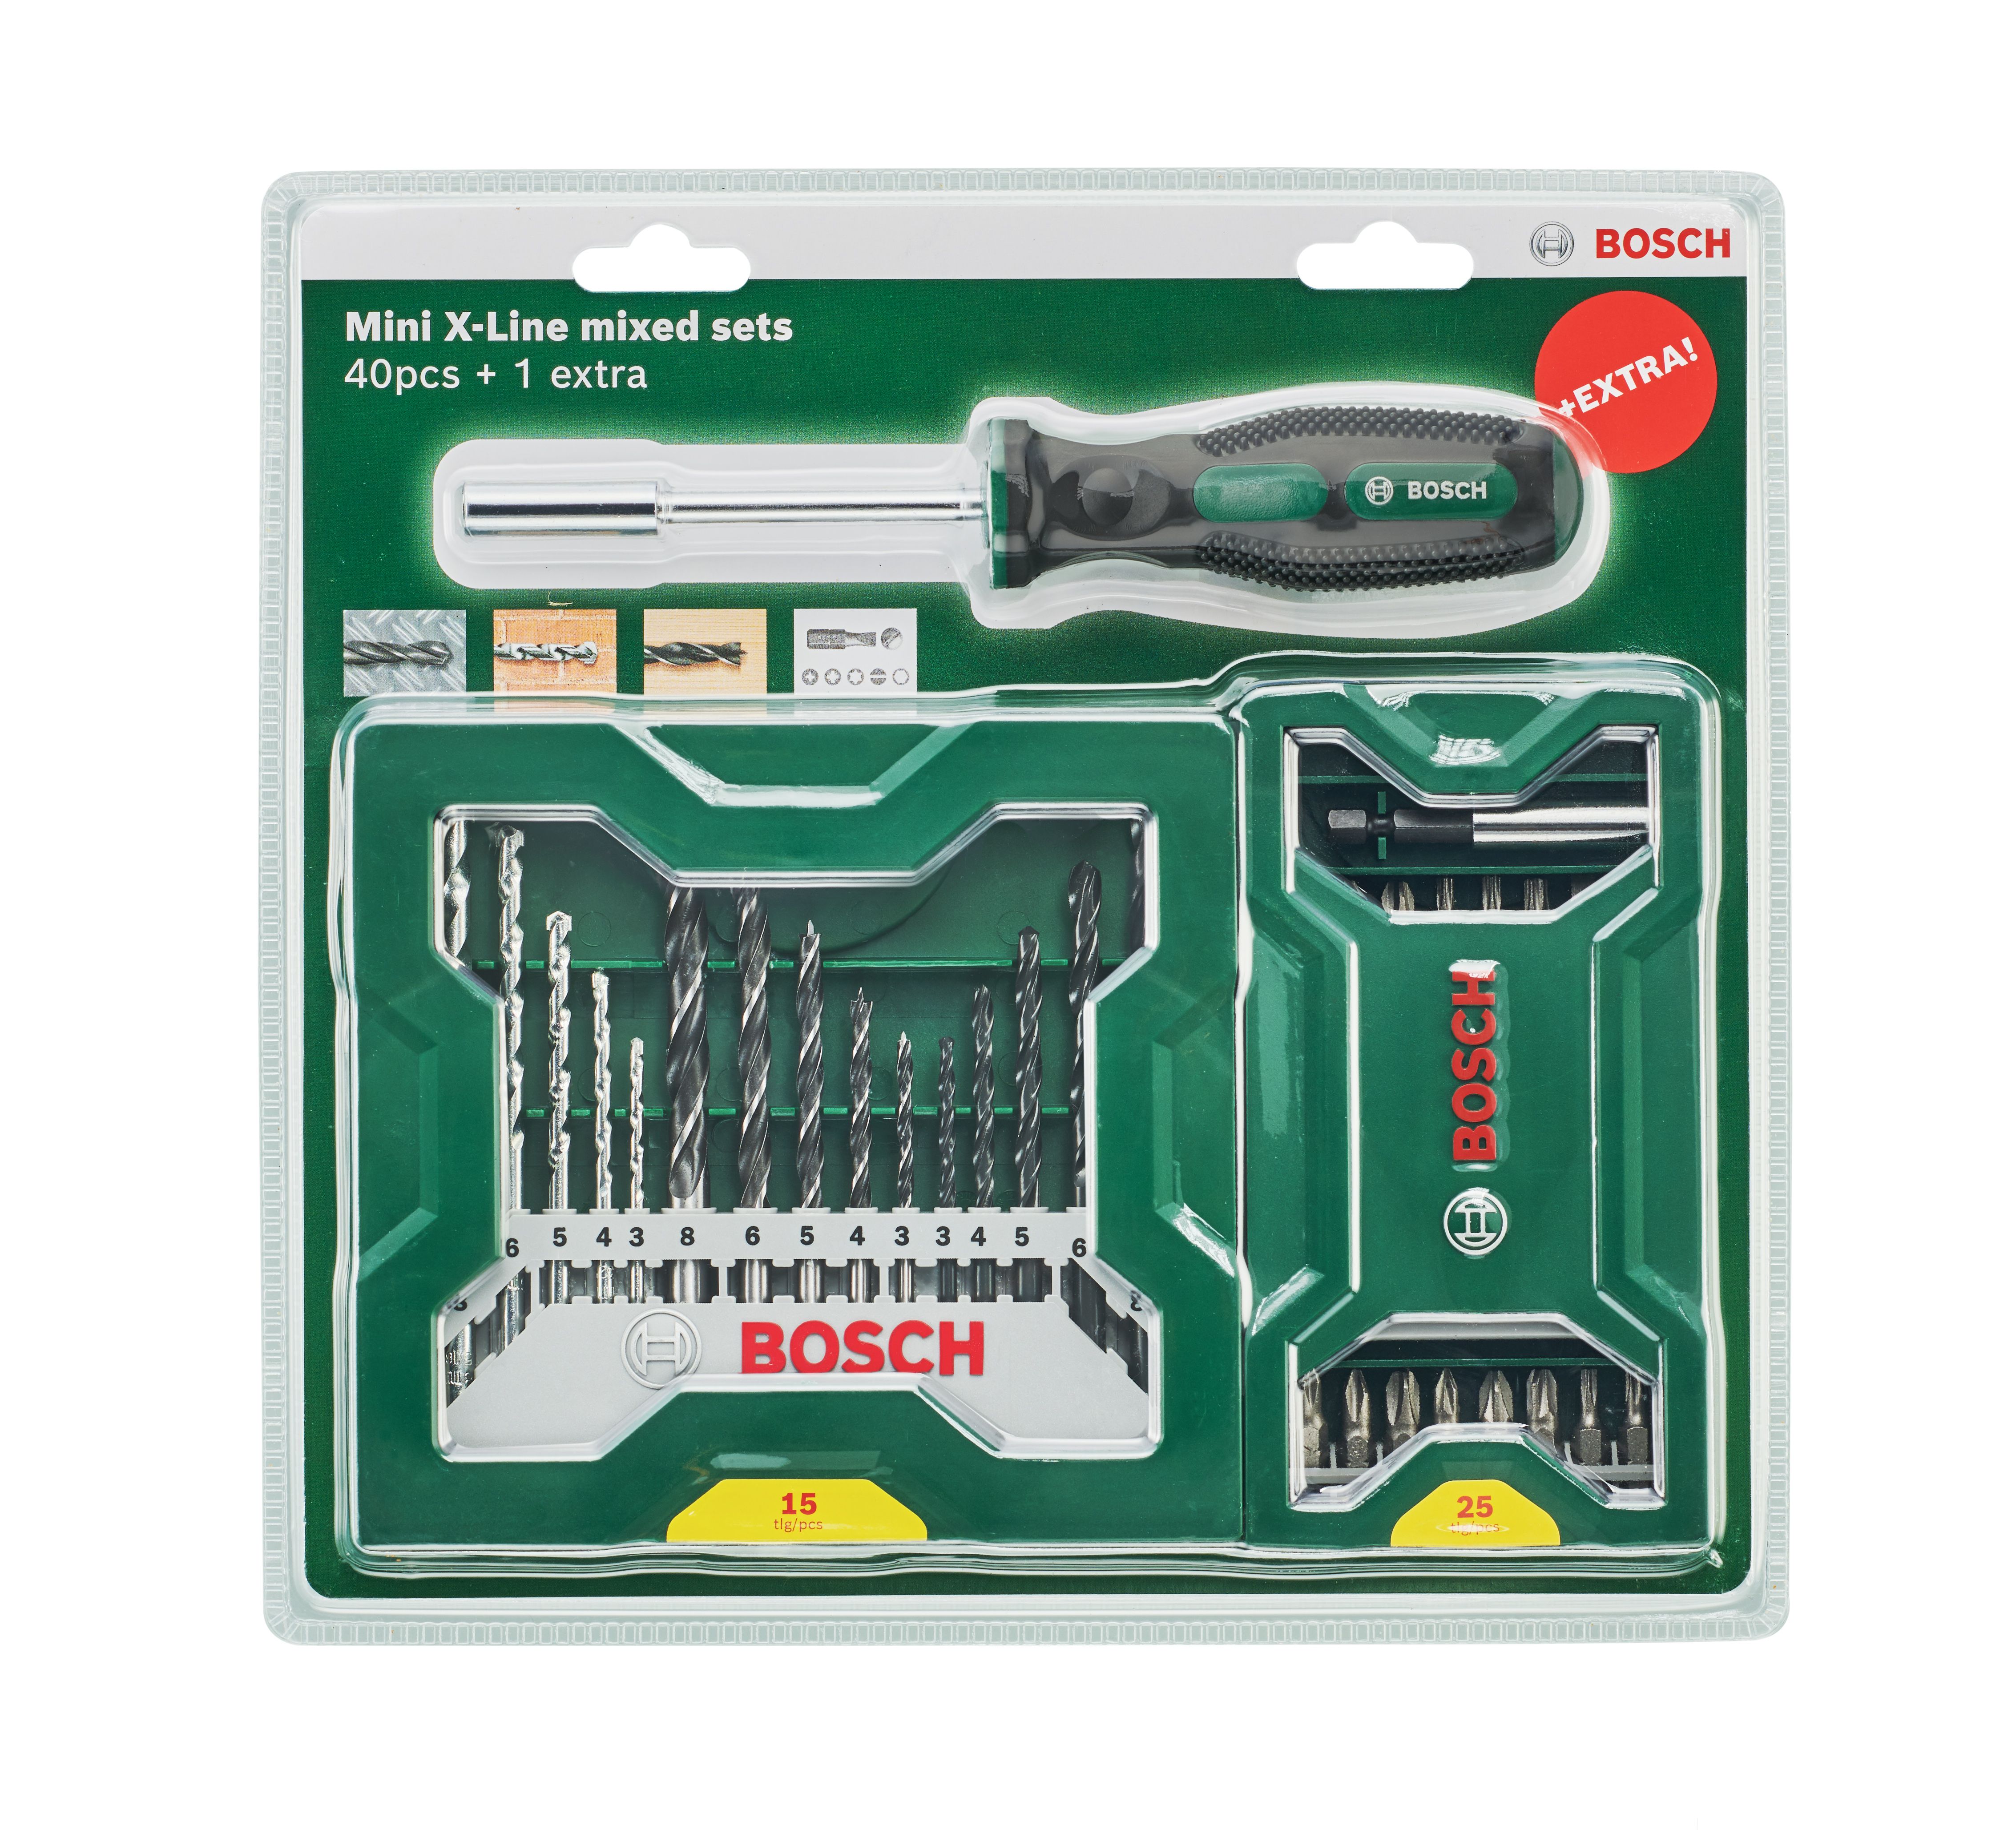 Bosch Promoline 41 piece Round Mixed Drill & screwdriver bit set - Mini-X-Line mixed set